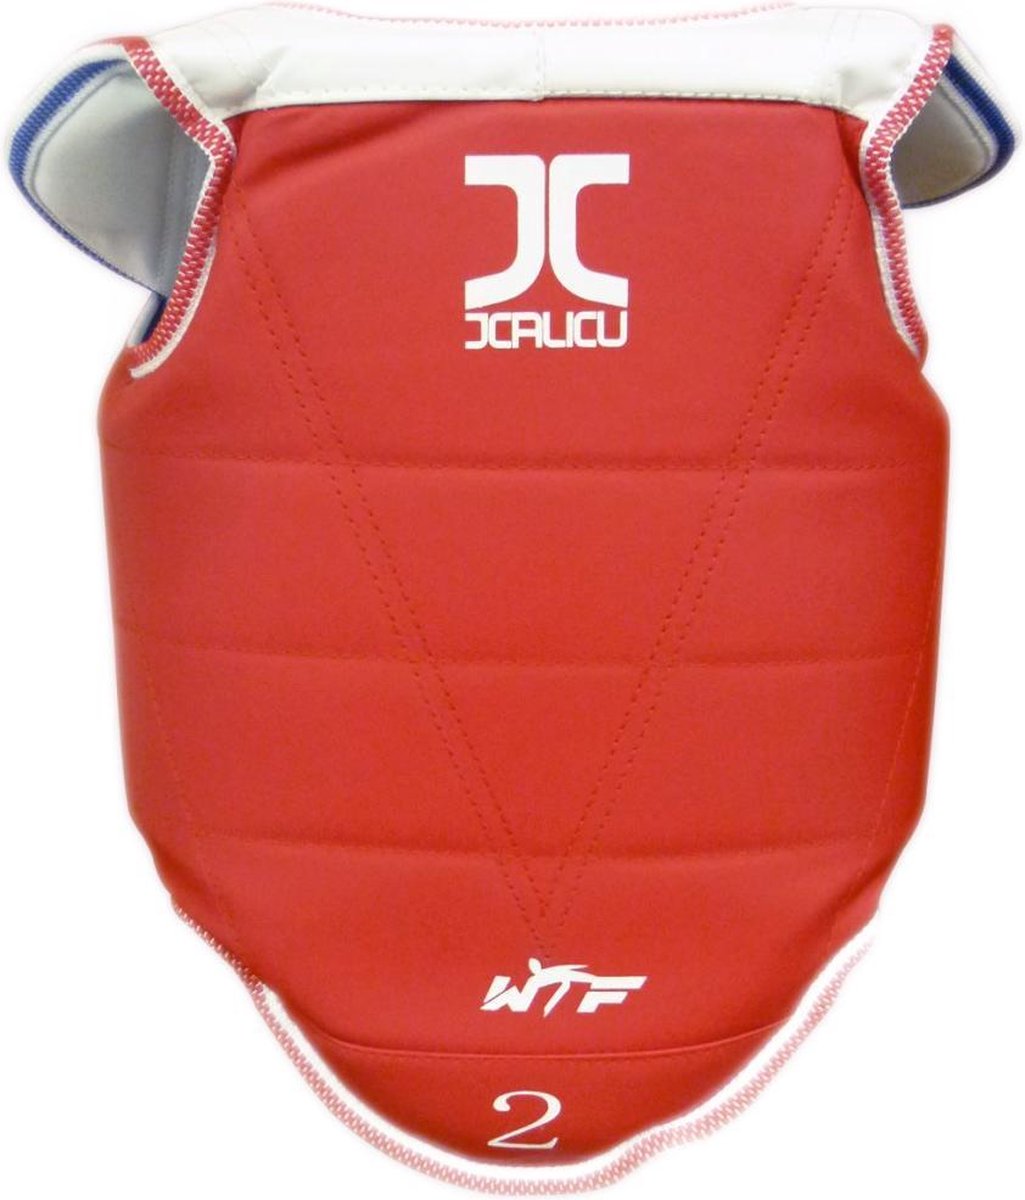 Taekwondo-borstbeschermer Premium JC | WT-goedgekeurd | Rood / Blauw (Maat: M)